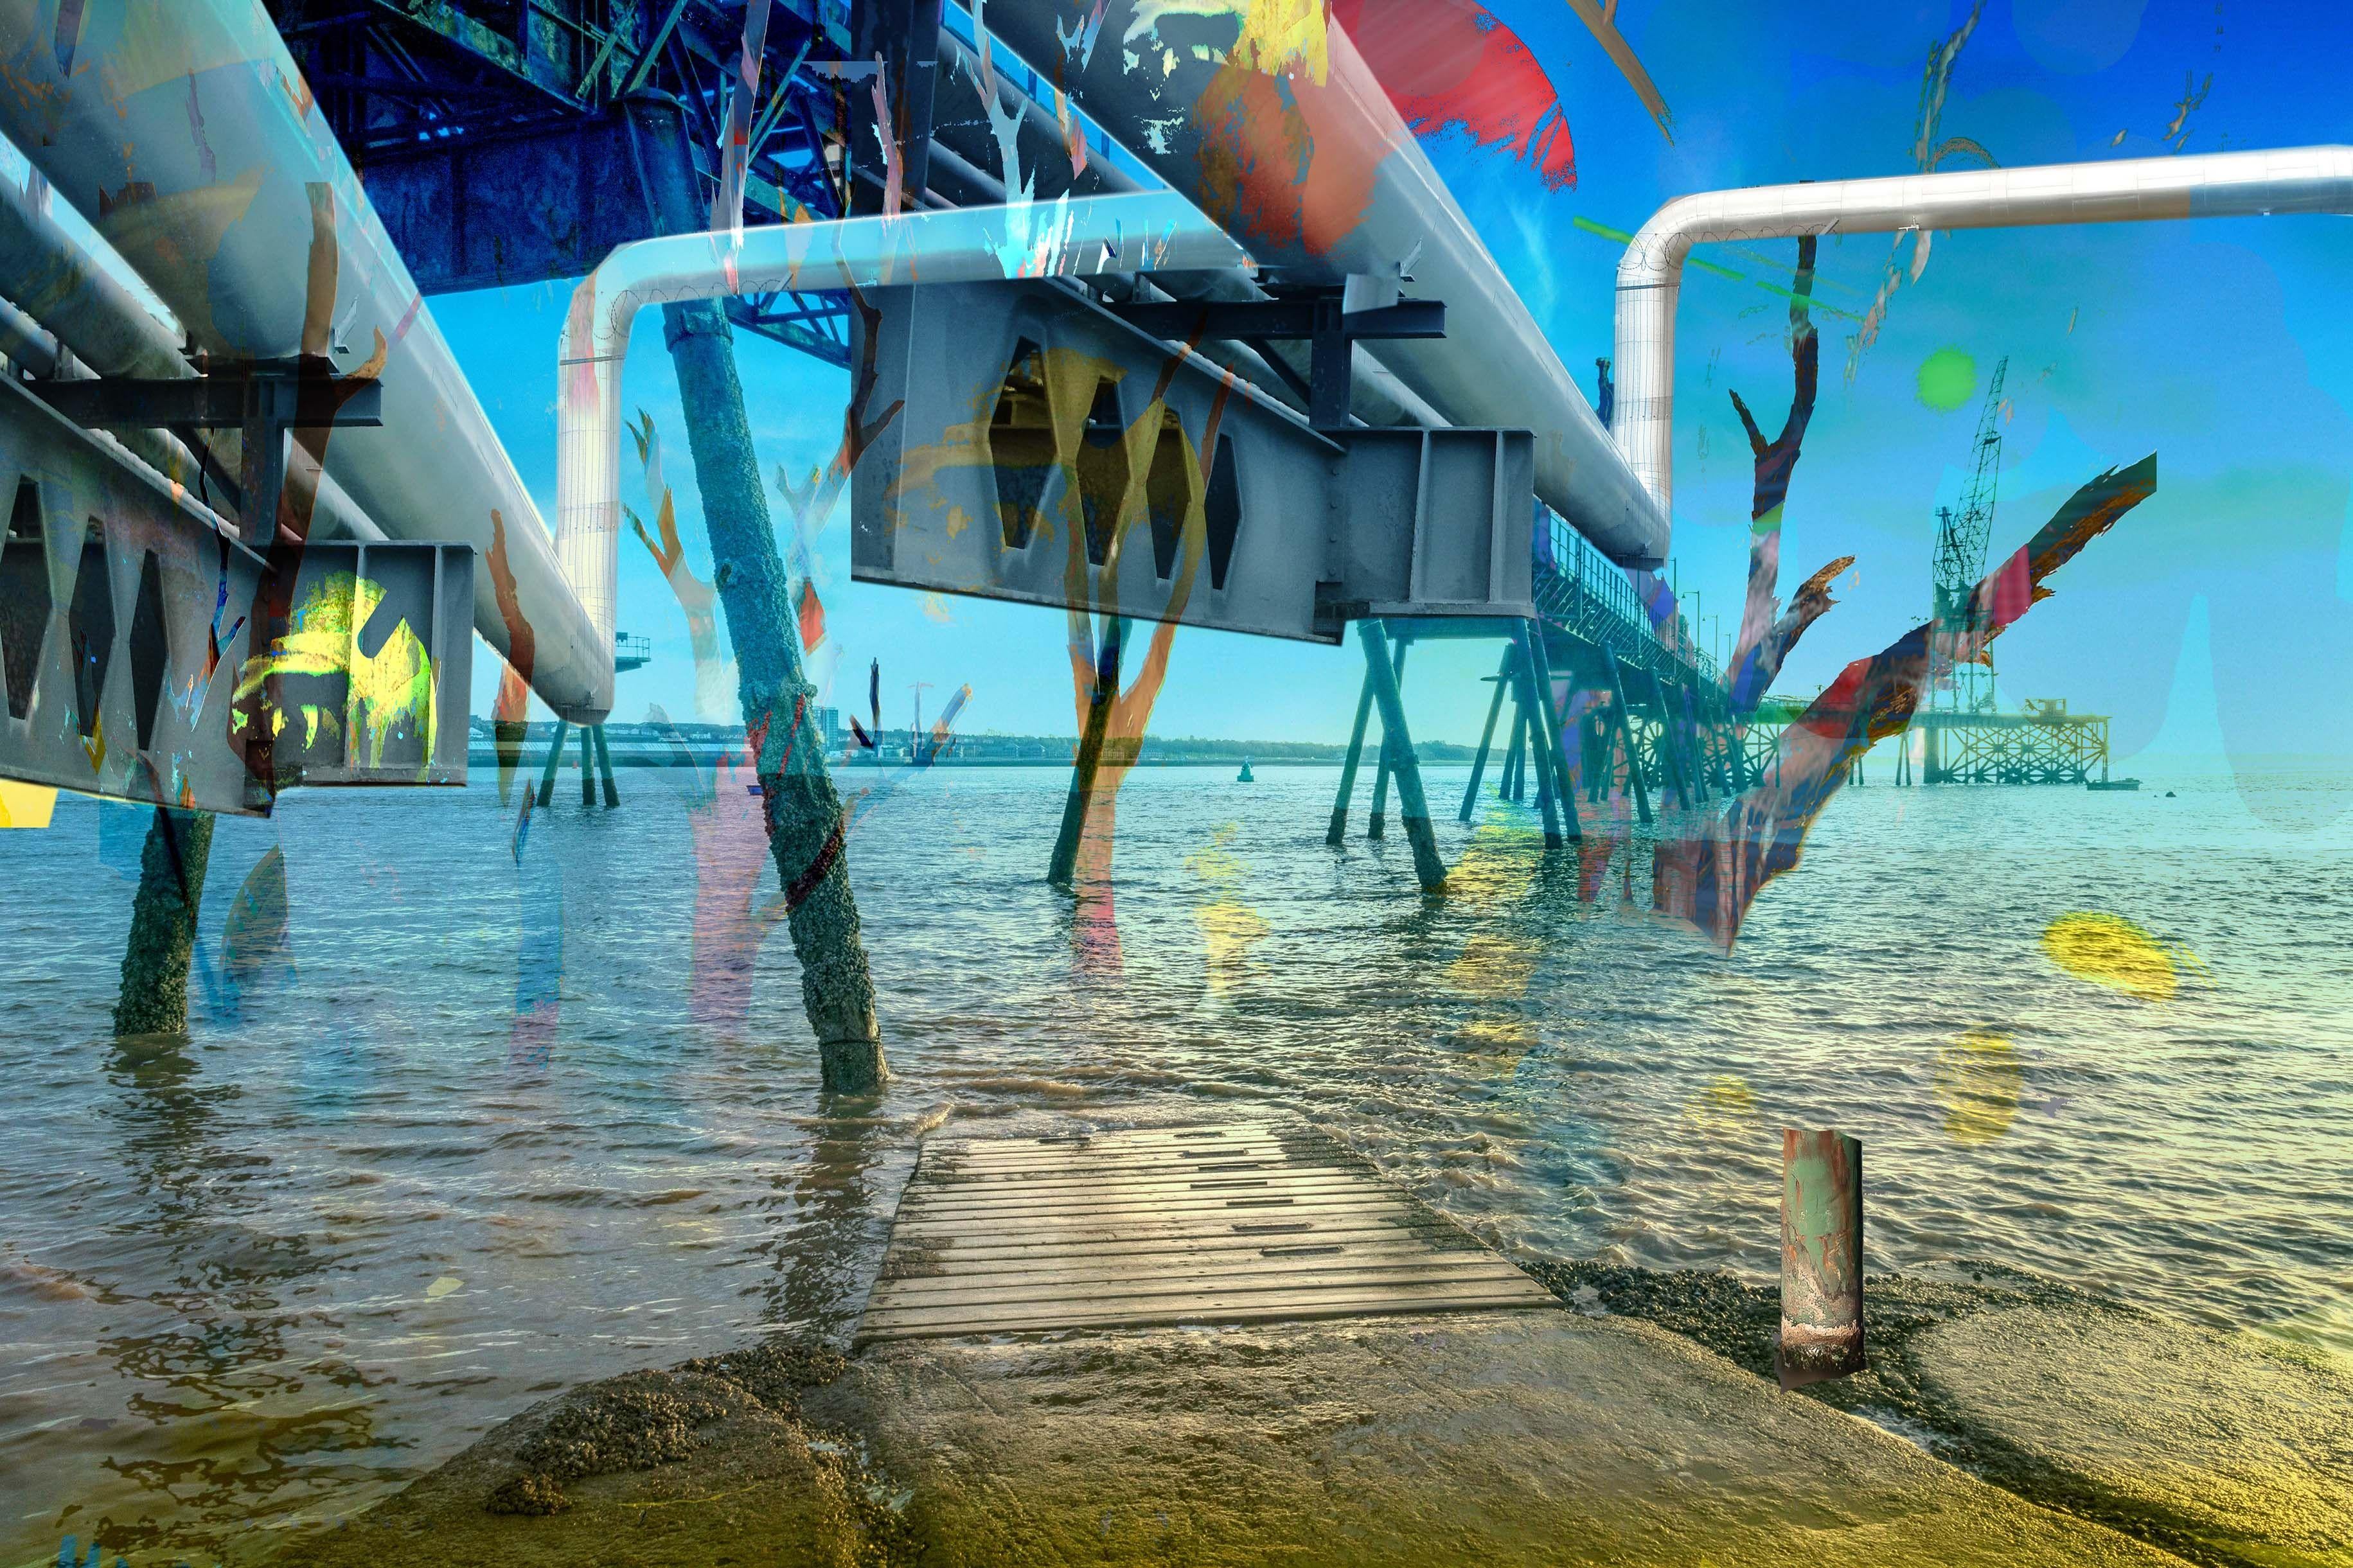 Color Photograph Geert Lemmers - Plant Industrial at Sea I ( Plante industrielle en mer), photographie, type C